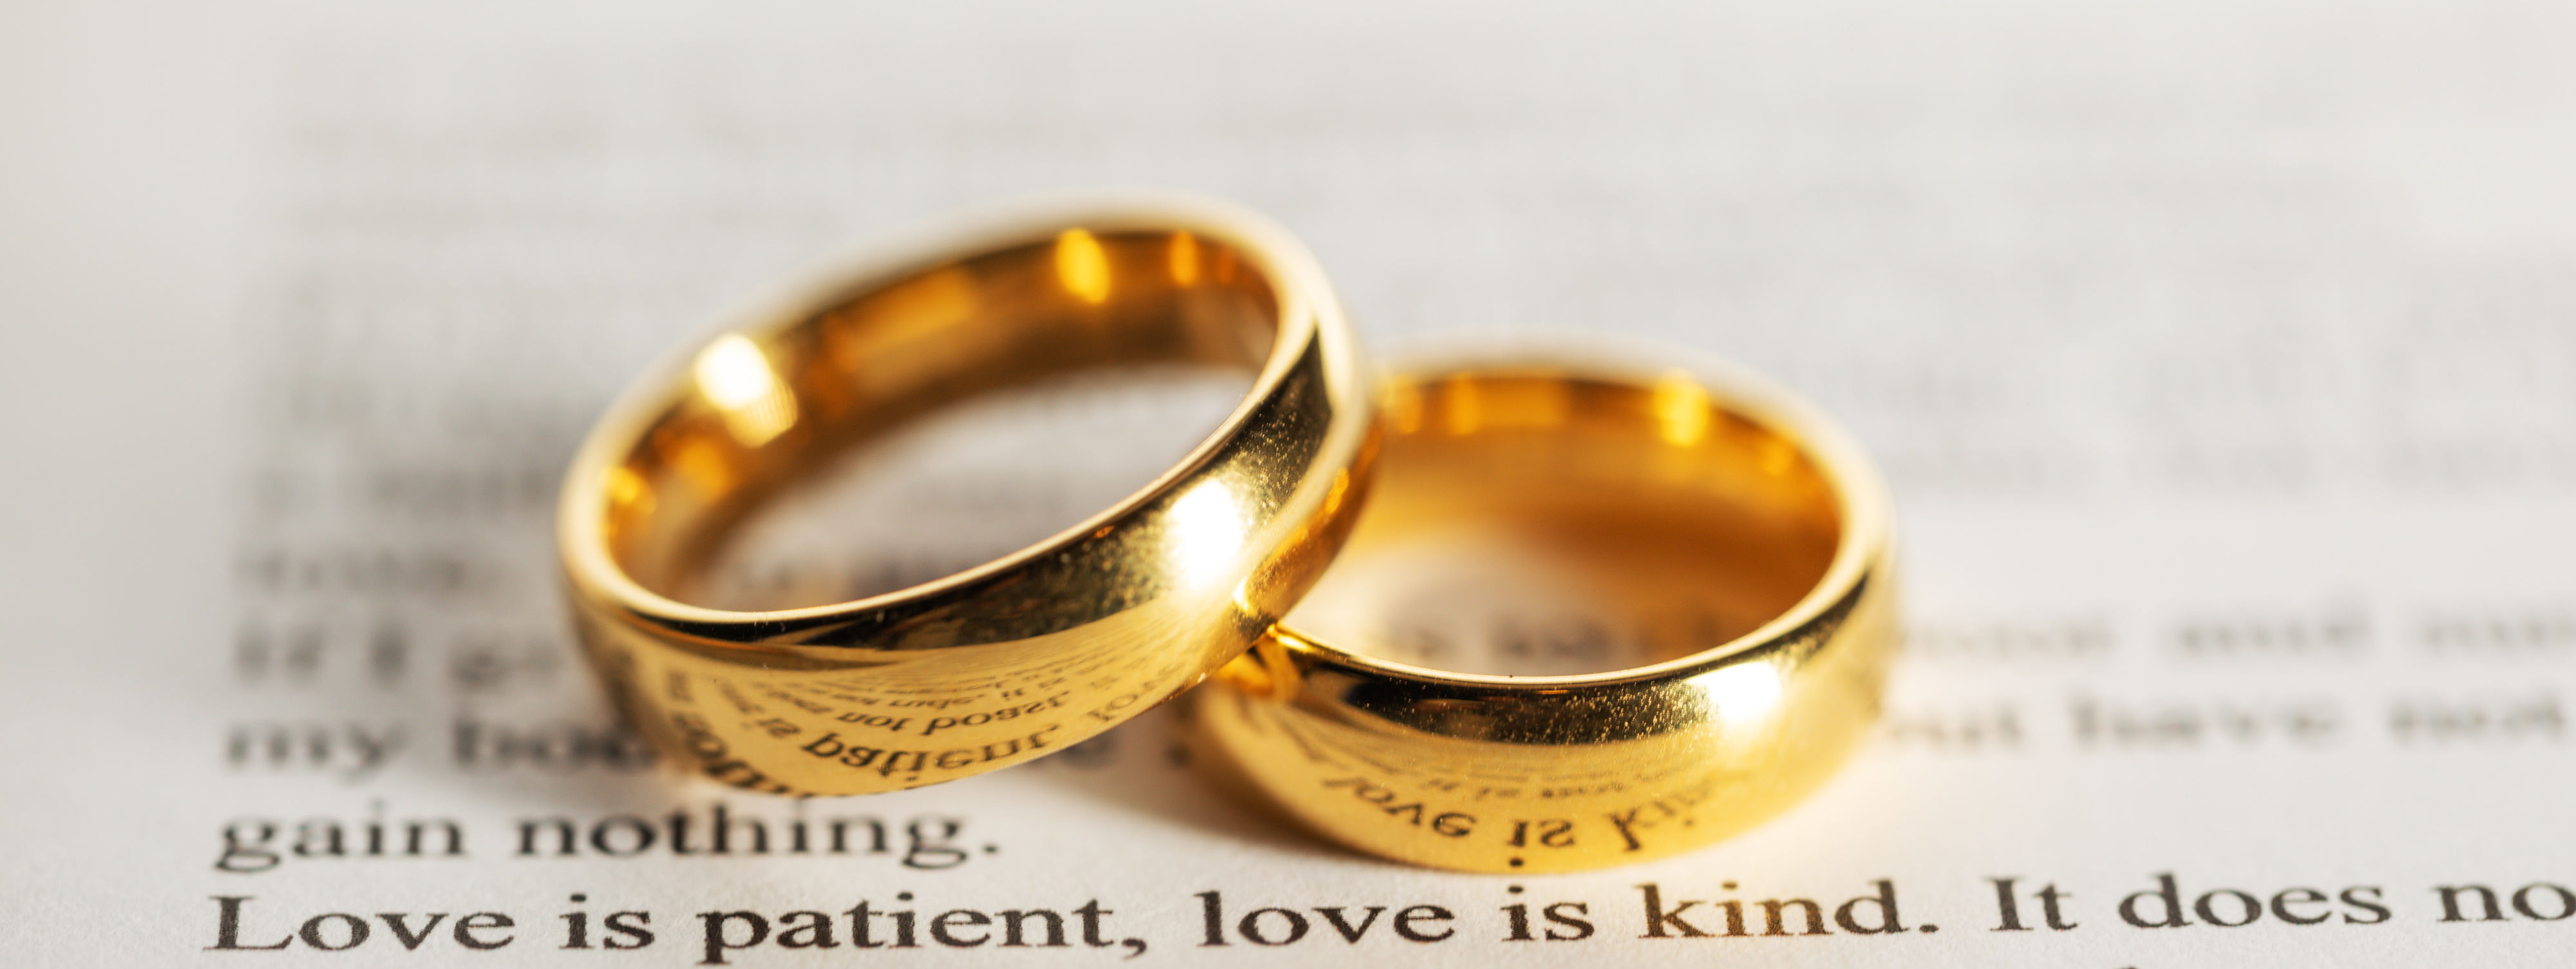 Golden wedding rings on bible book